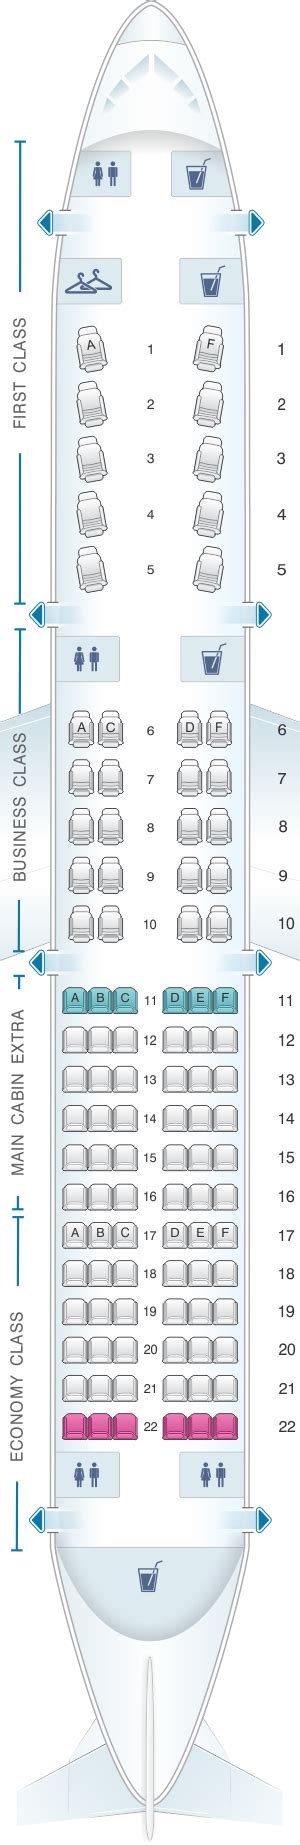 A321lr Seat Map